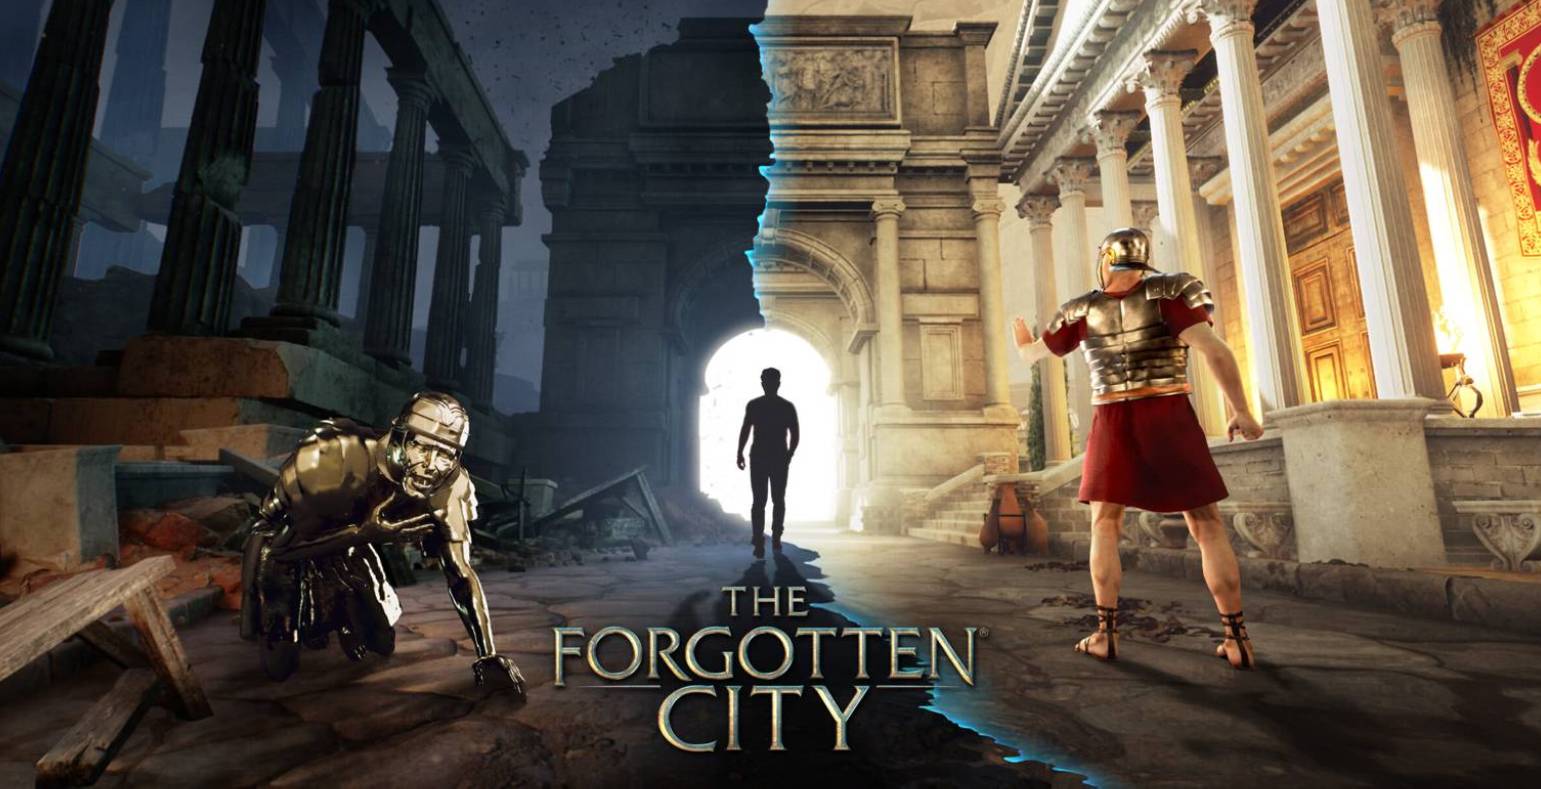 THE FORGOTTEN CITY